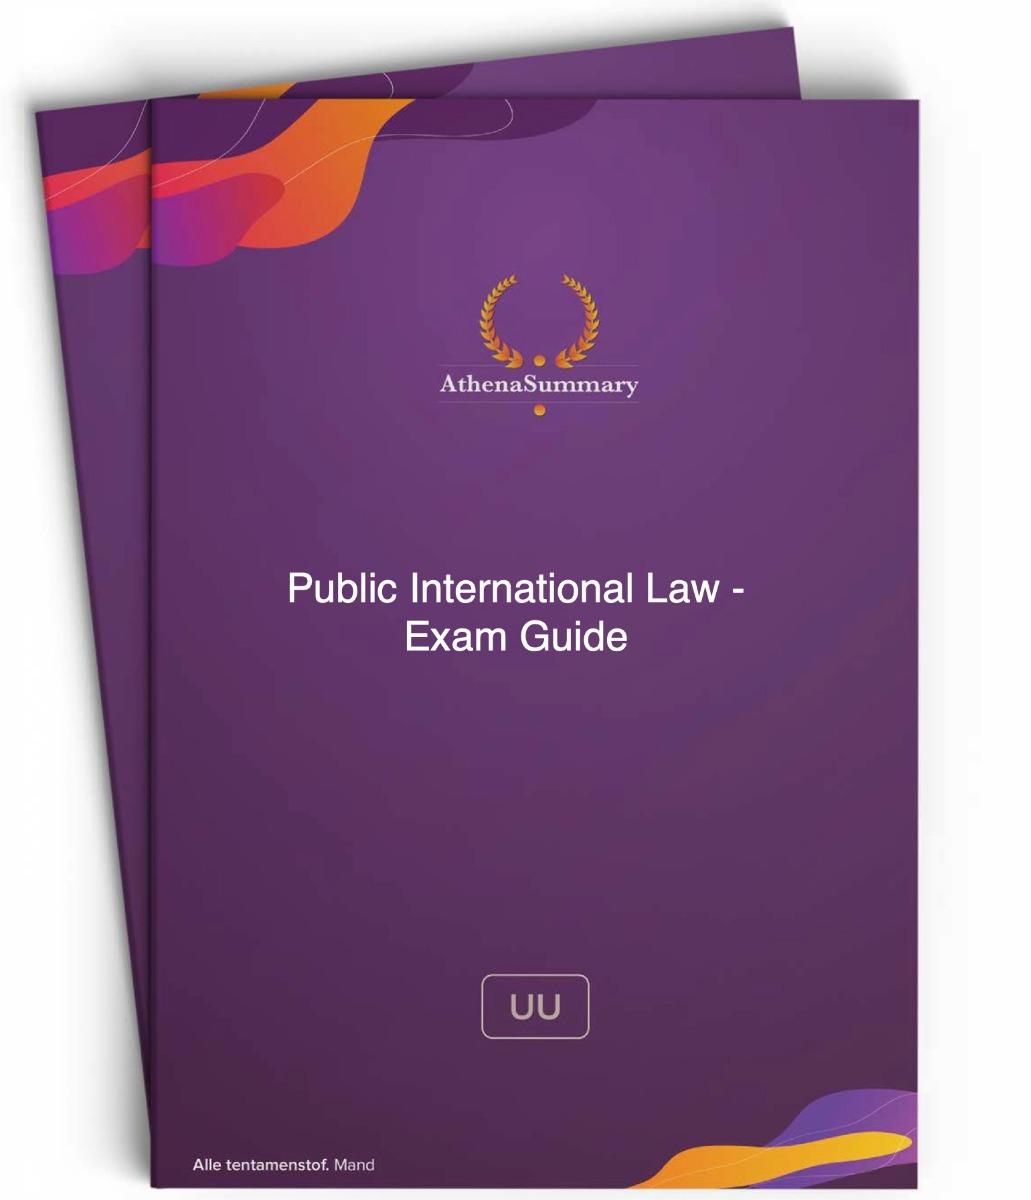 Exam Guide - Public International Law